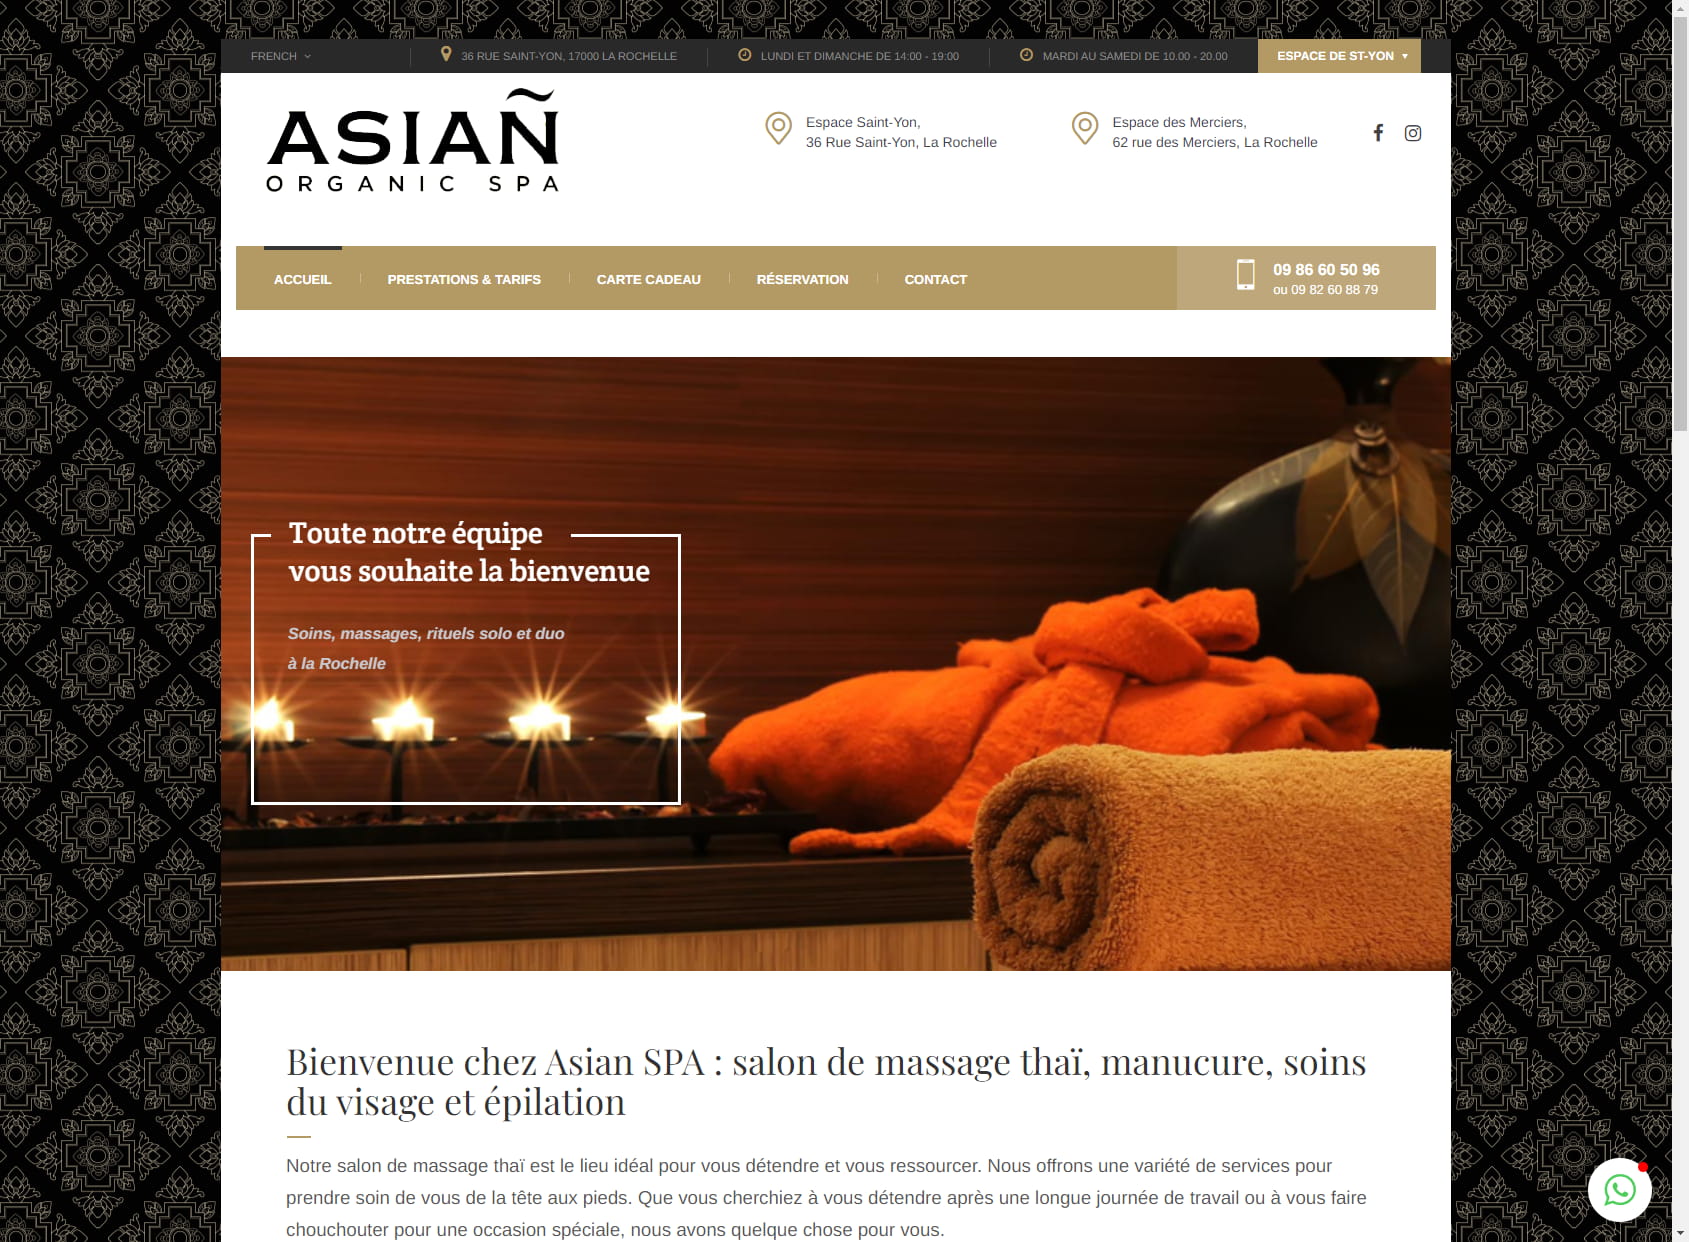 Asian Organic Spa